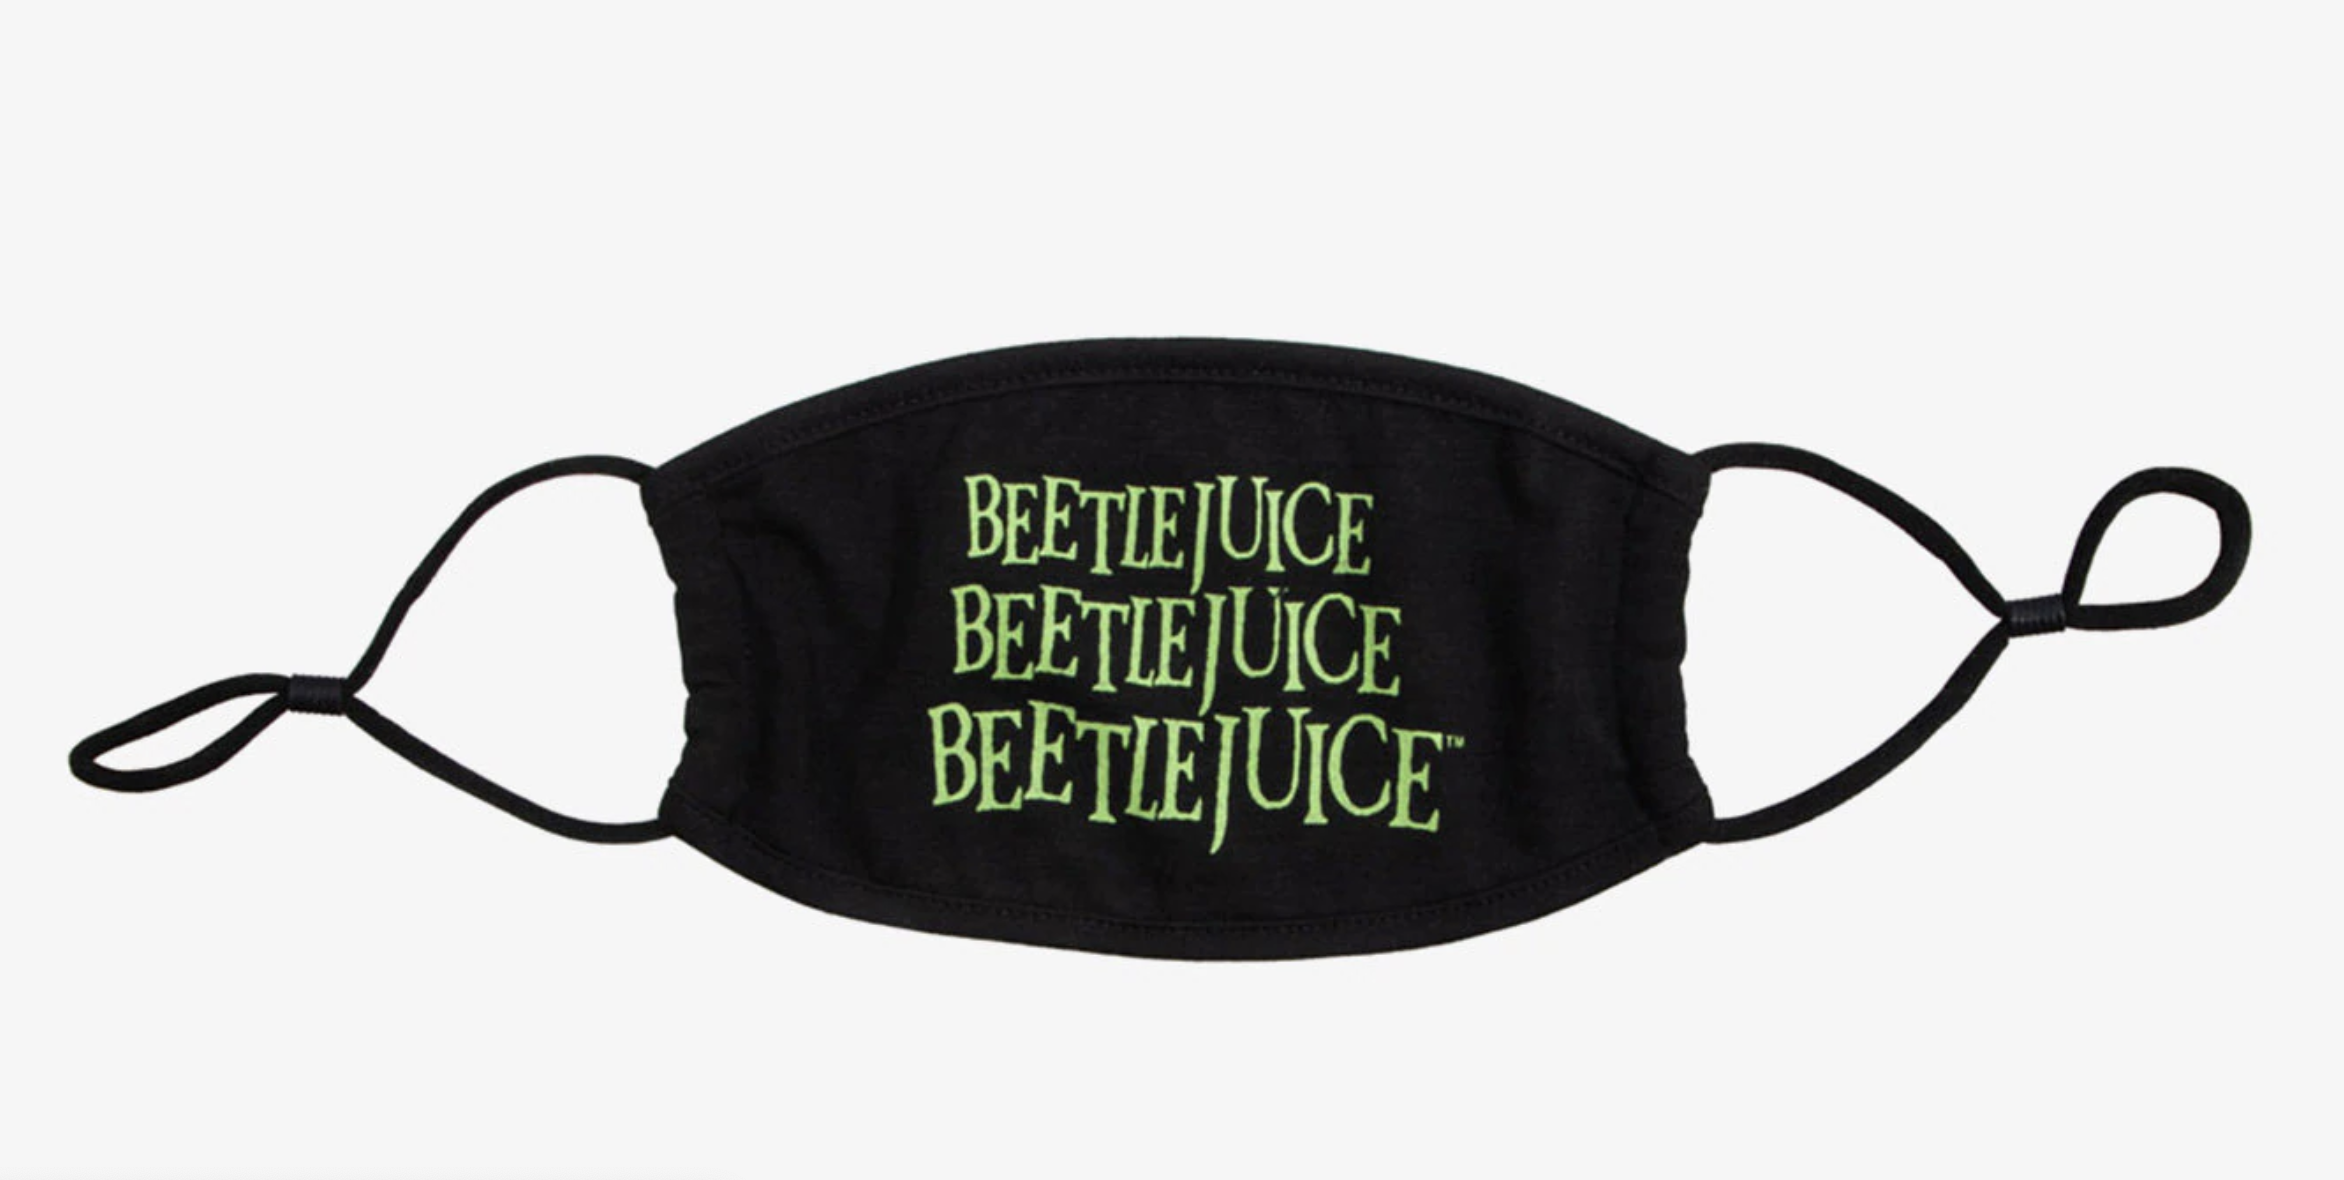 Black mask that says Beetlejuice three tiems 